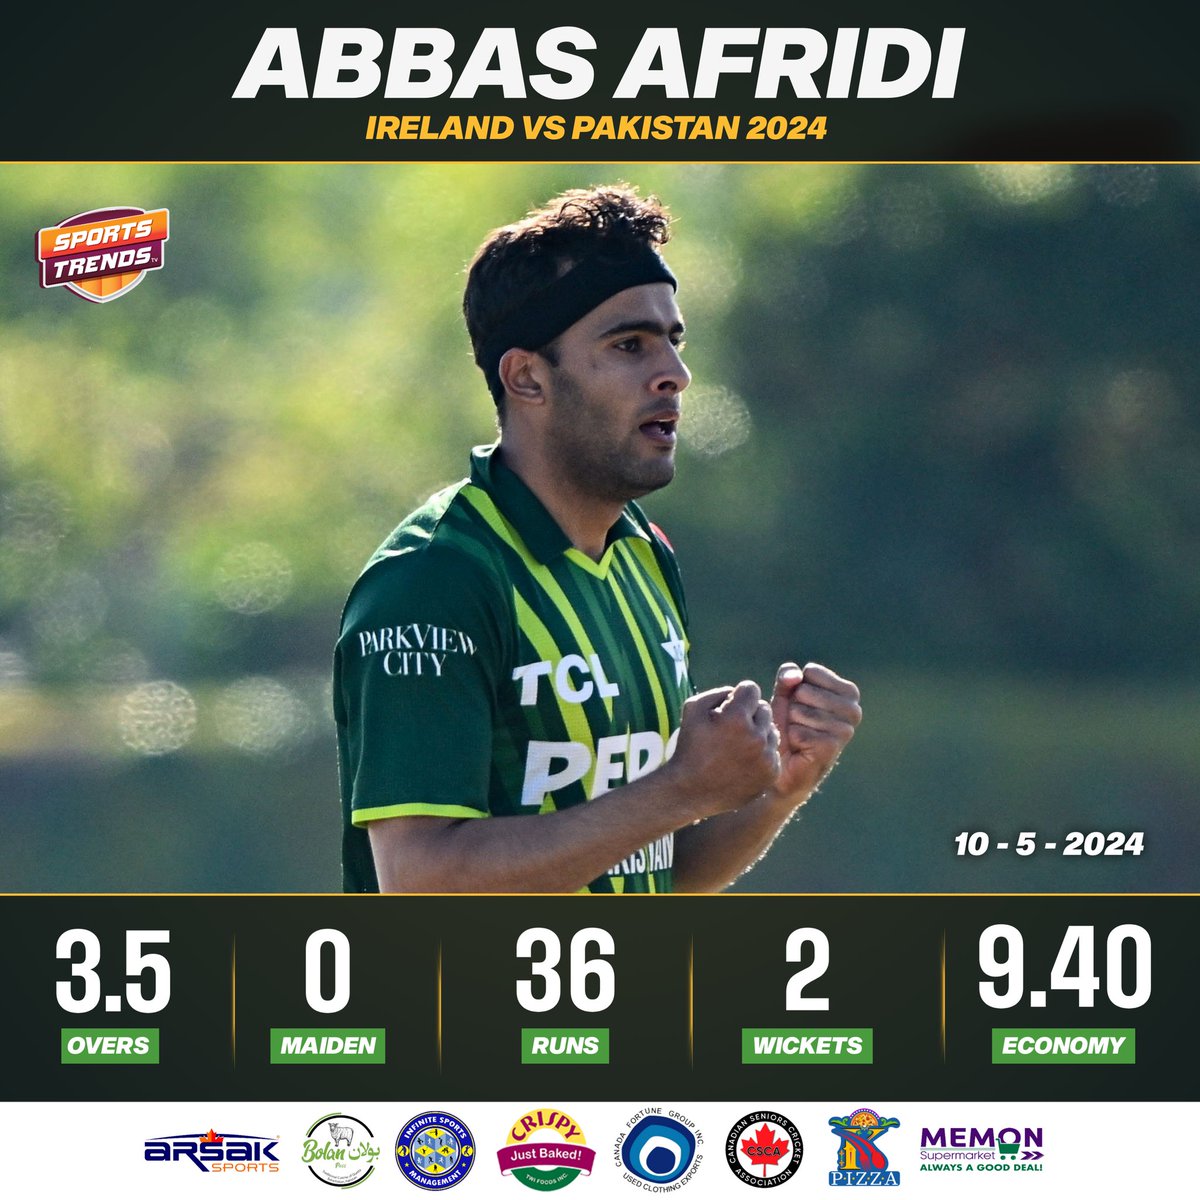 2 Wickets For Abbas Afridi Against Ireland in First T20 International Match 🔥 #Cricket #Pakistan #PakistanCricket #IREvPAK #PAKvIRE #IREvsPAK #PAKvsIRE #BabarAzam #SaimAyub #ShadabKhan #SportsTrendsCan #SportsTrendsCanada